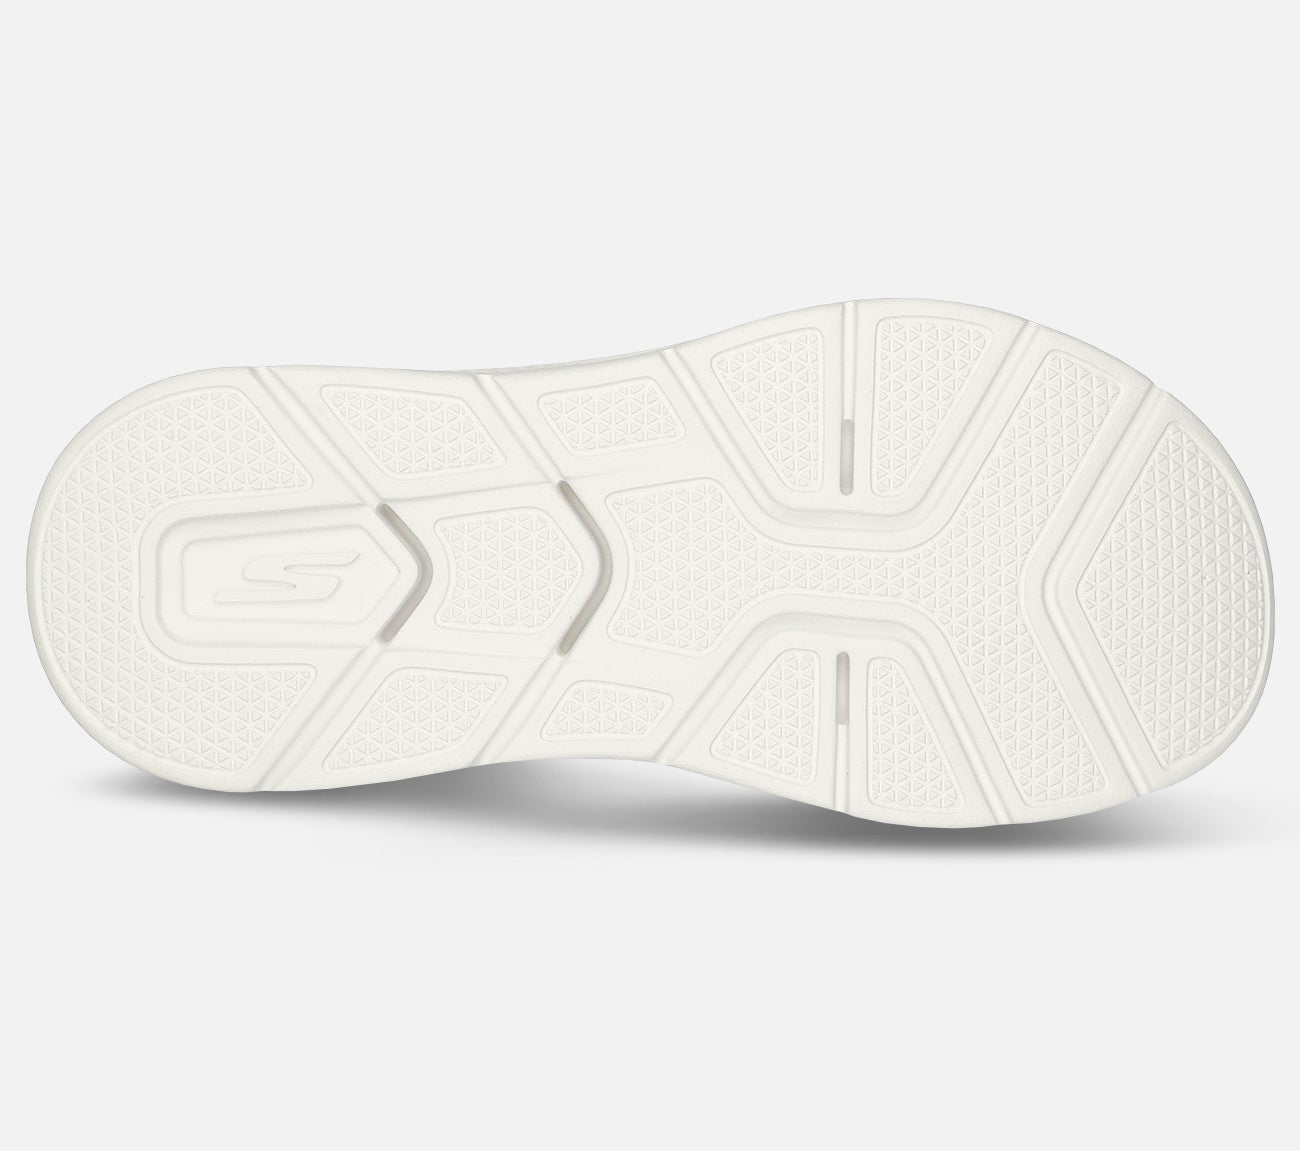 GO Consistent Sandal - Synthwave Sandal Skechers